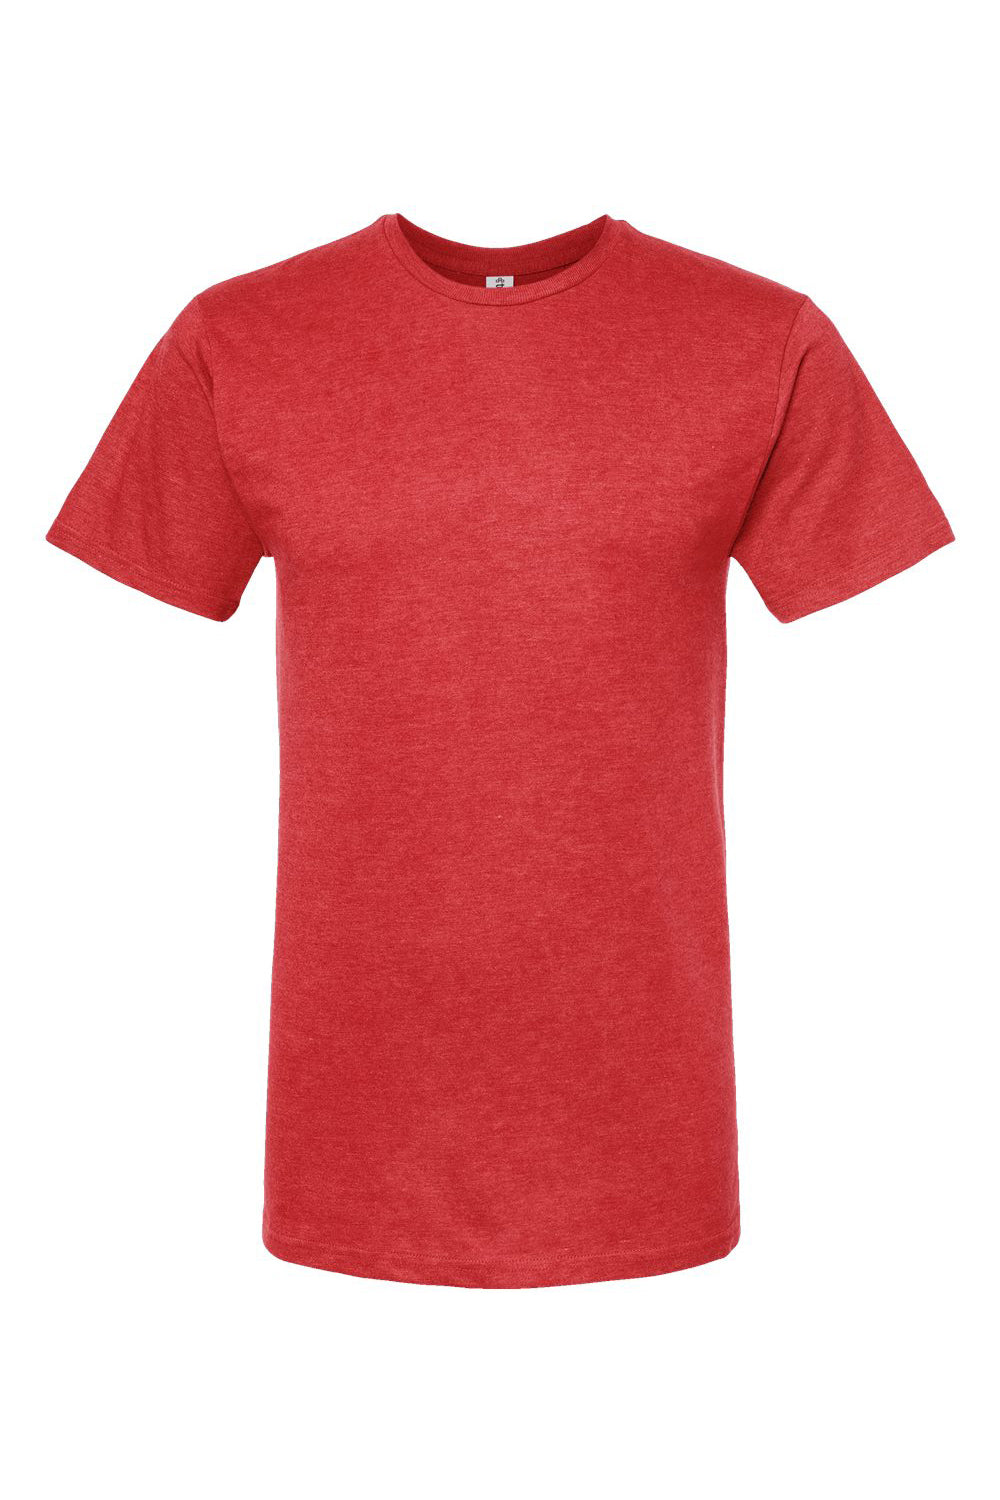 Tultex 290 Mens Jersey Short Sleeve Crewneck T-Shirt Heather Red Flat Front